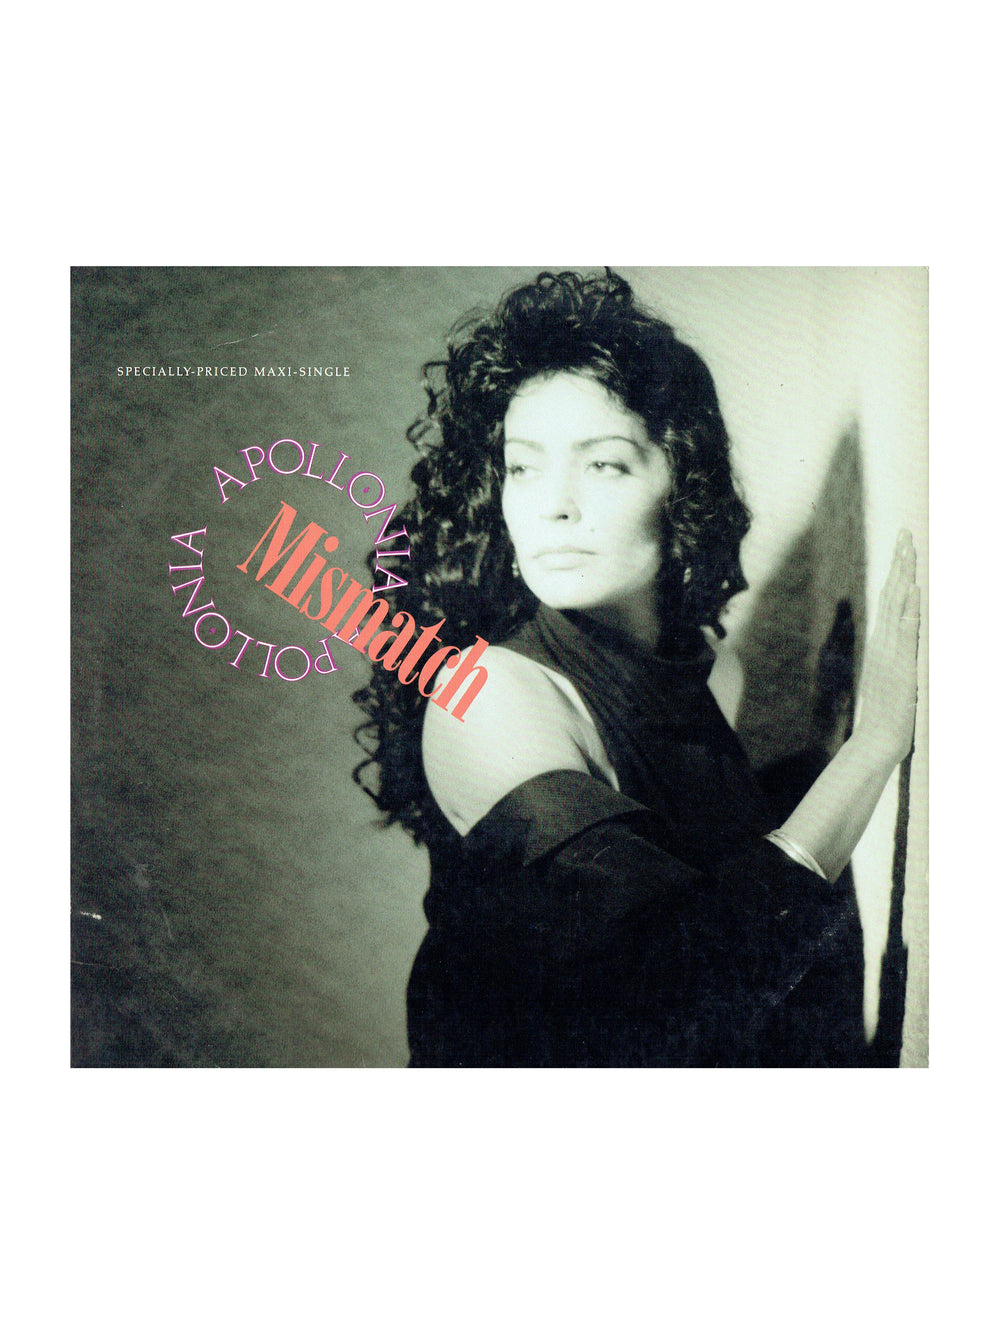 Prince – Apollonia Mismatch Vinyl 12" Single US Preloved: 1989